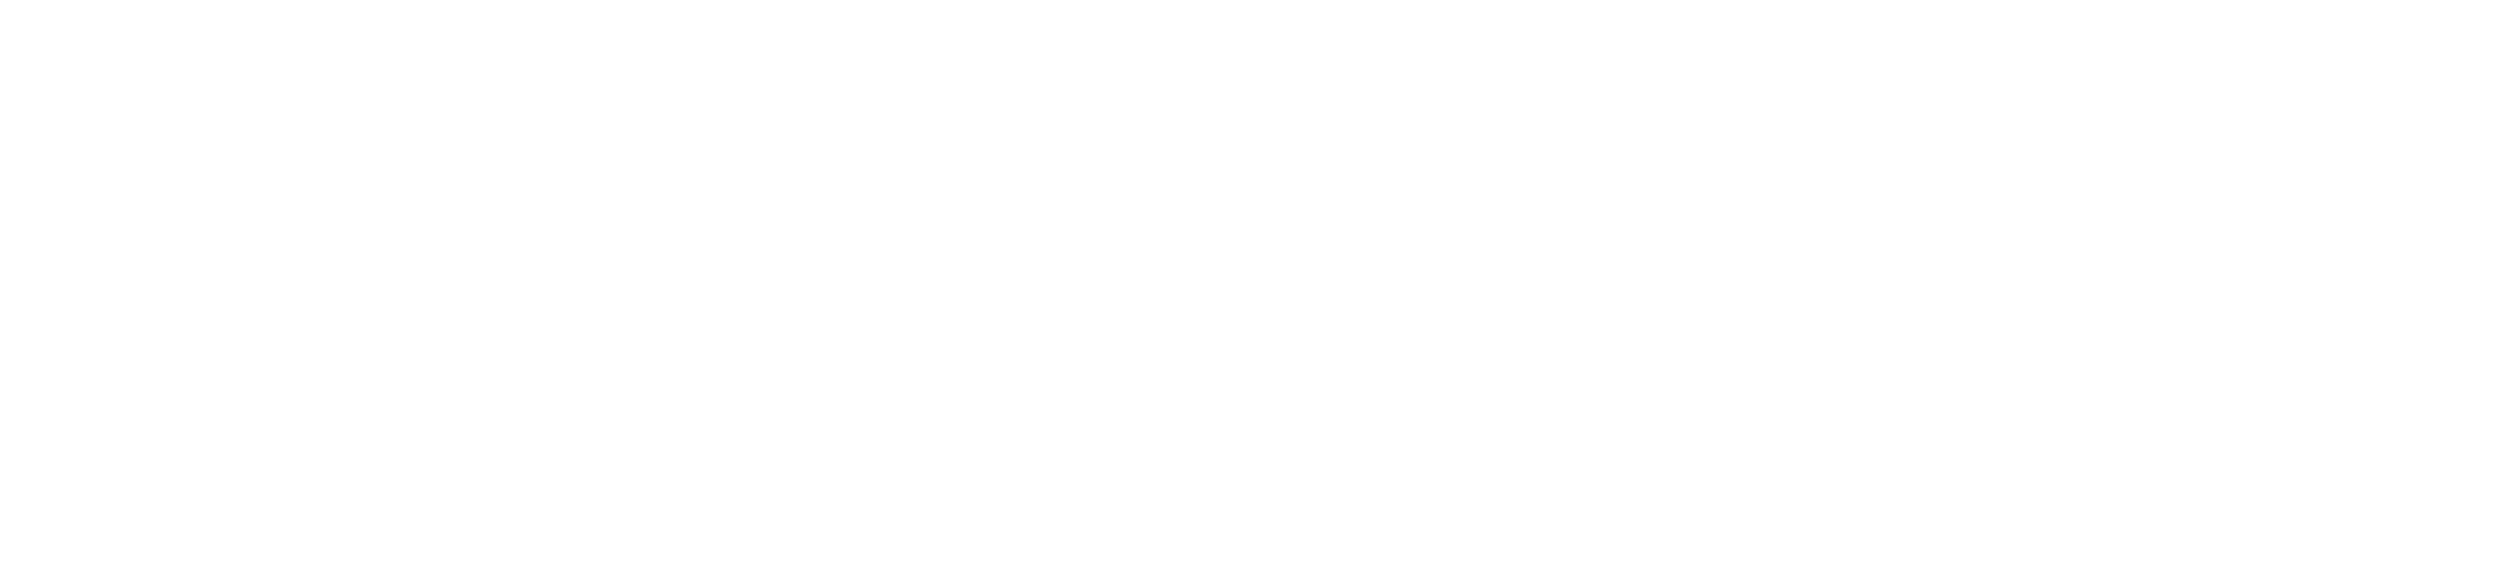 flexport-logo